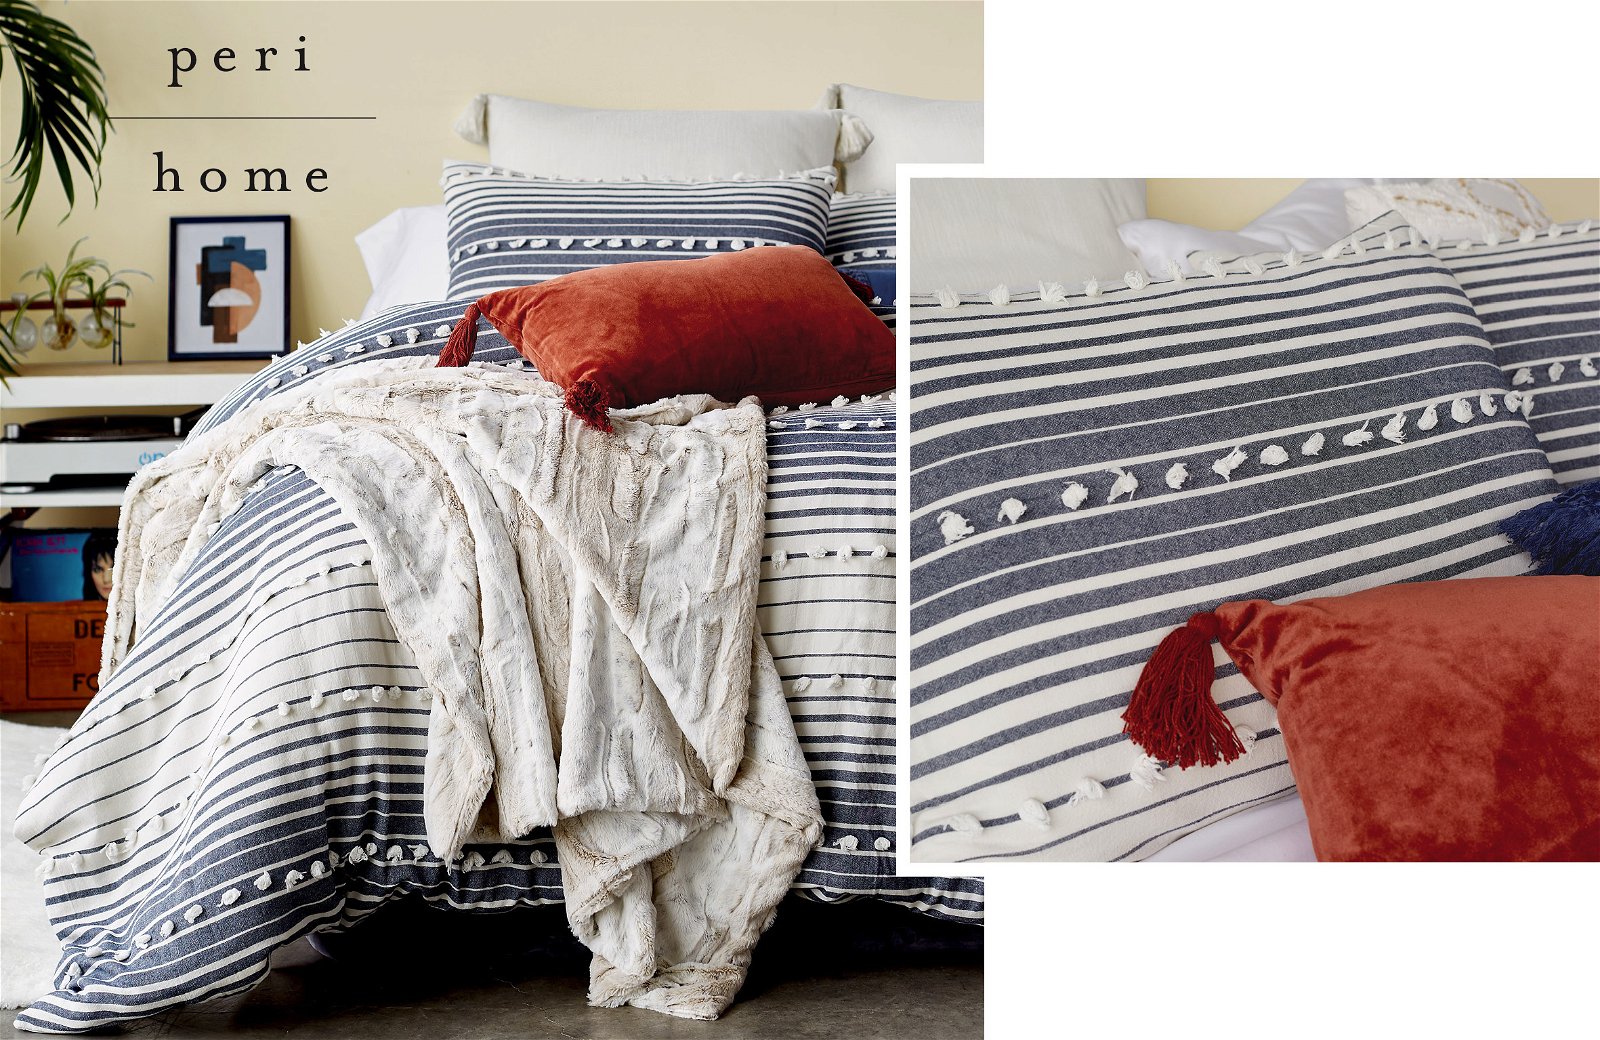 Peri Home Yarn Dyed Tufted Stripe Bedding in Indigo